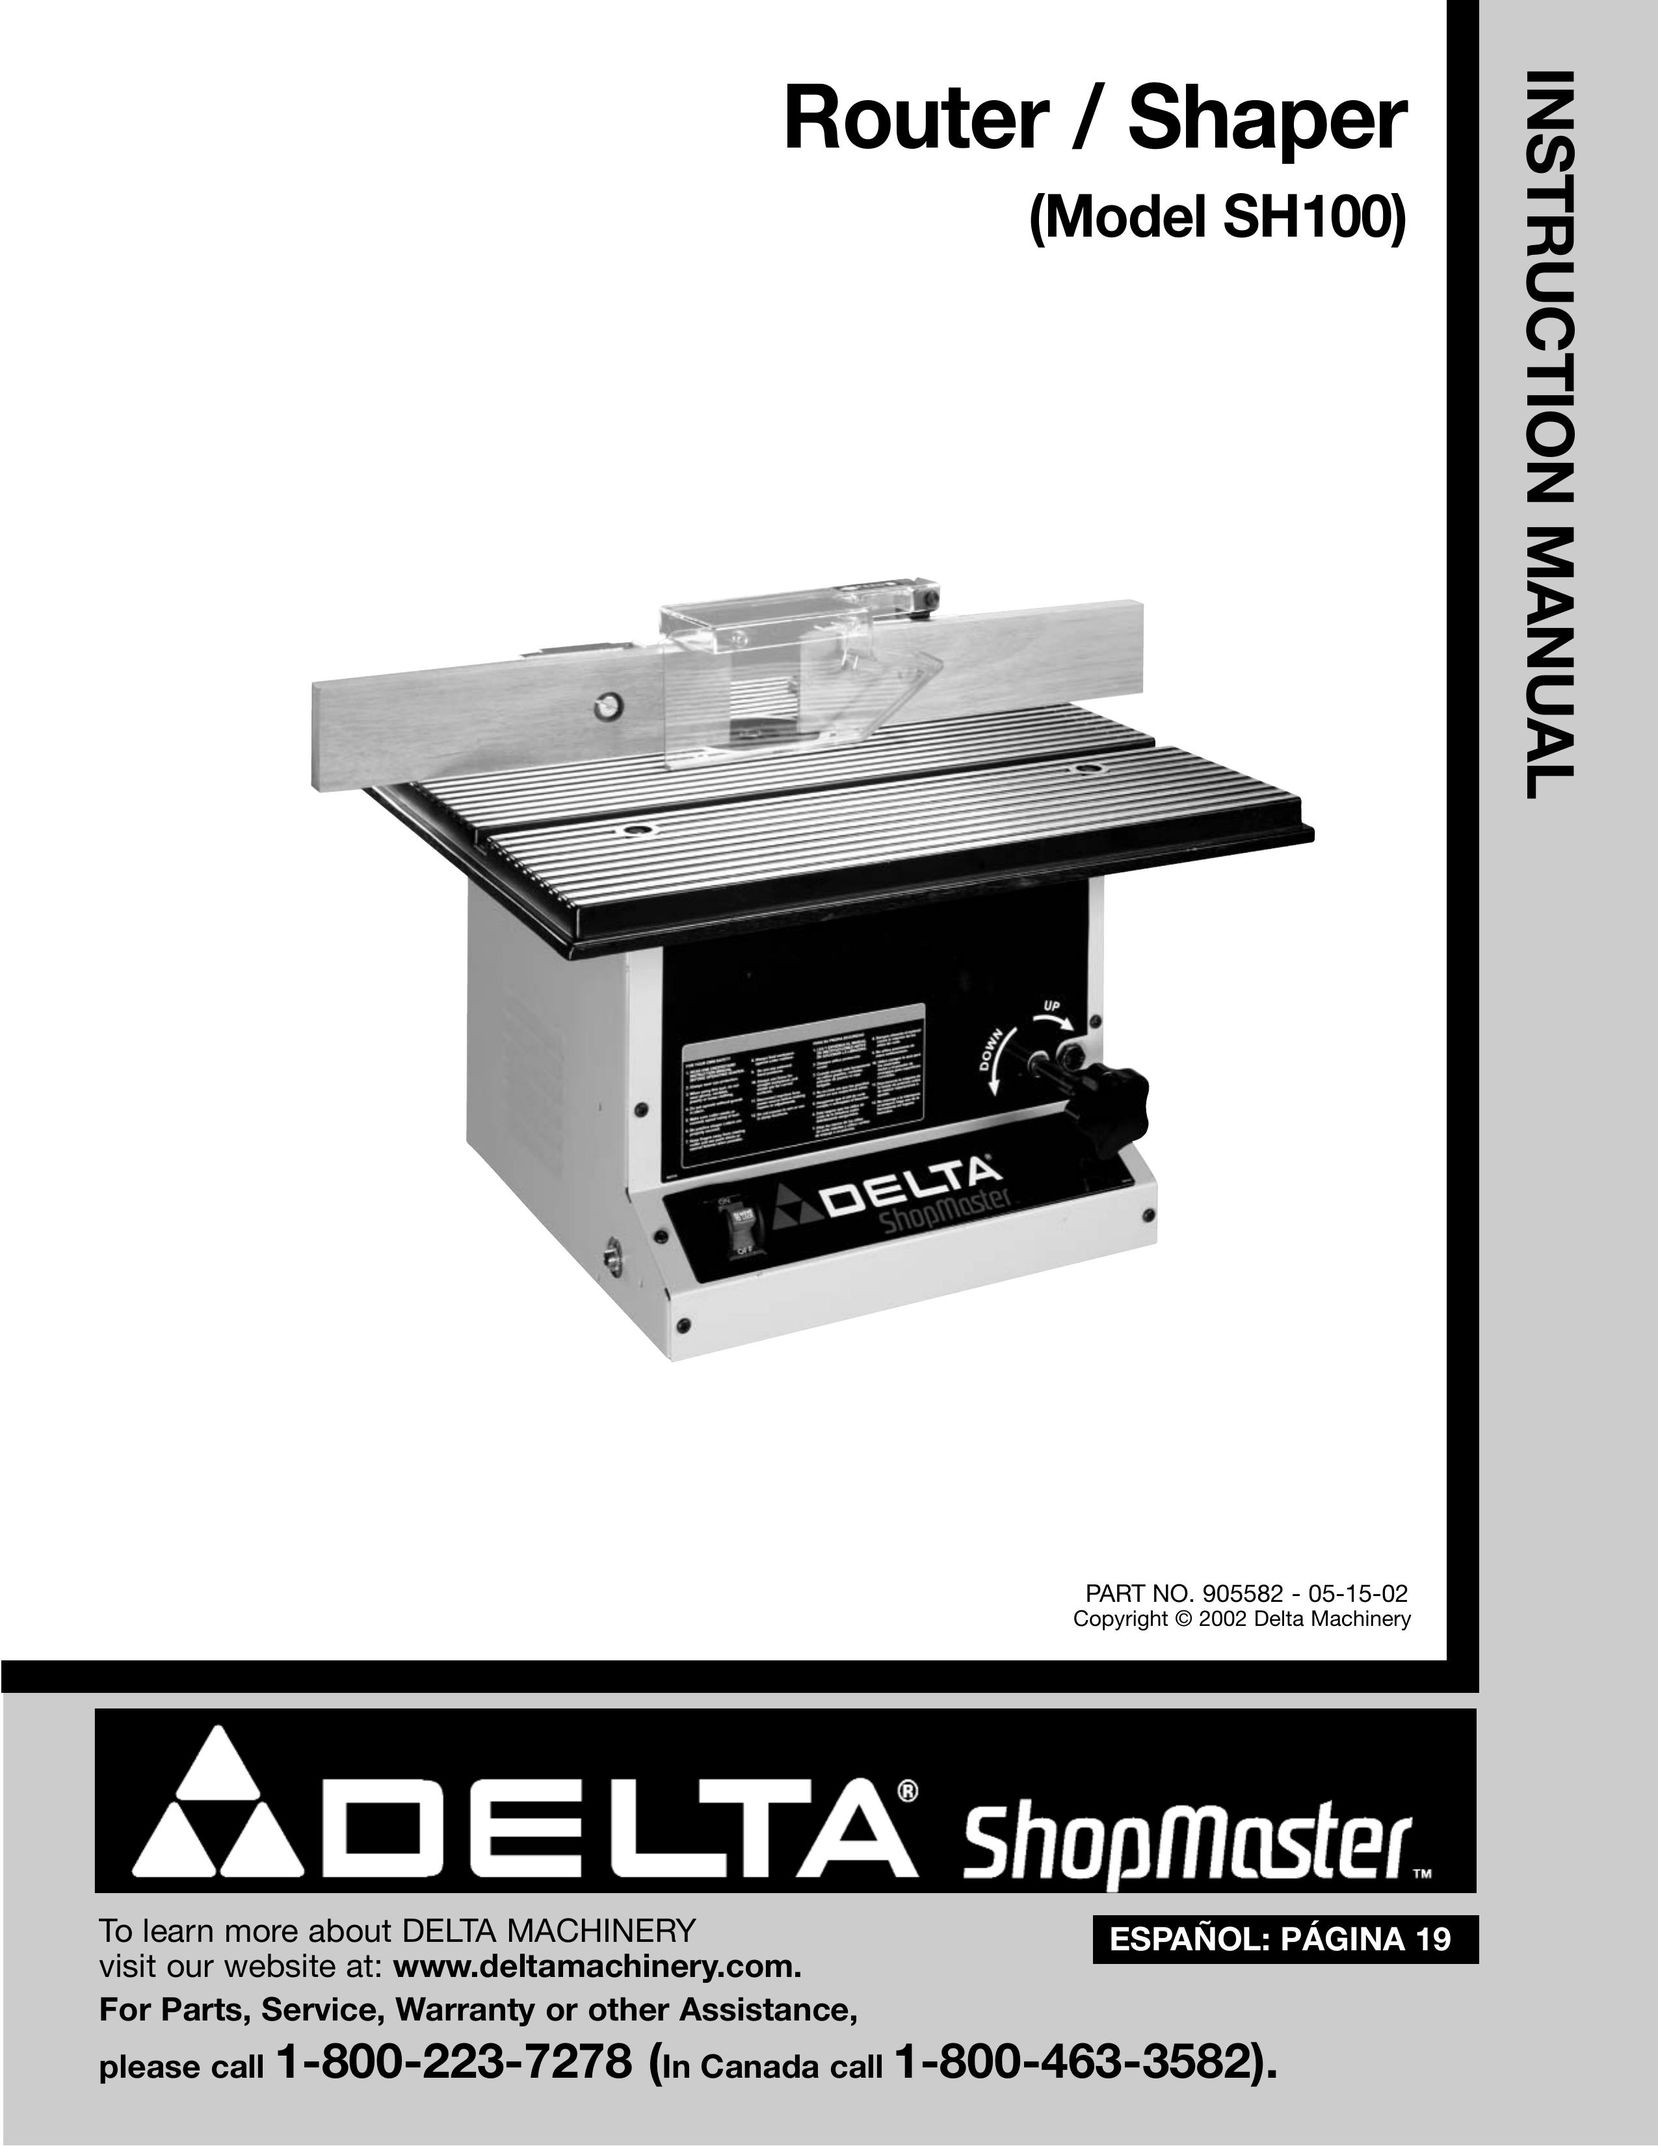 Delta SH100 Router User Manual